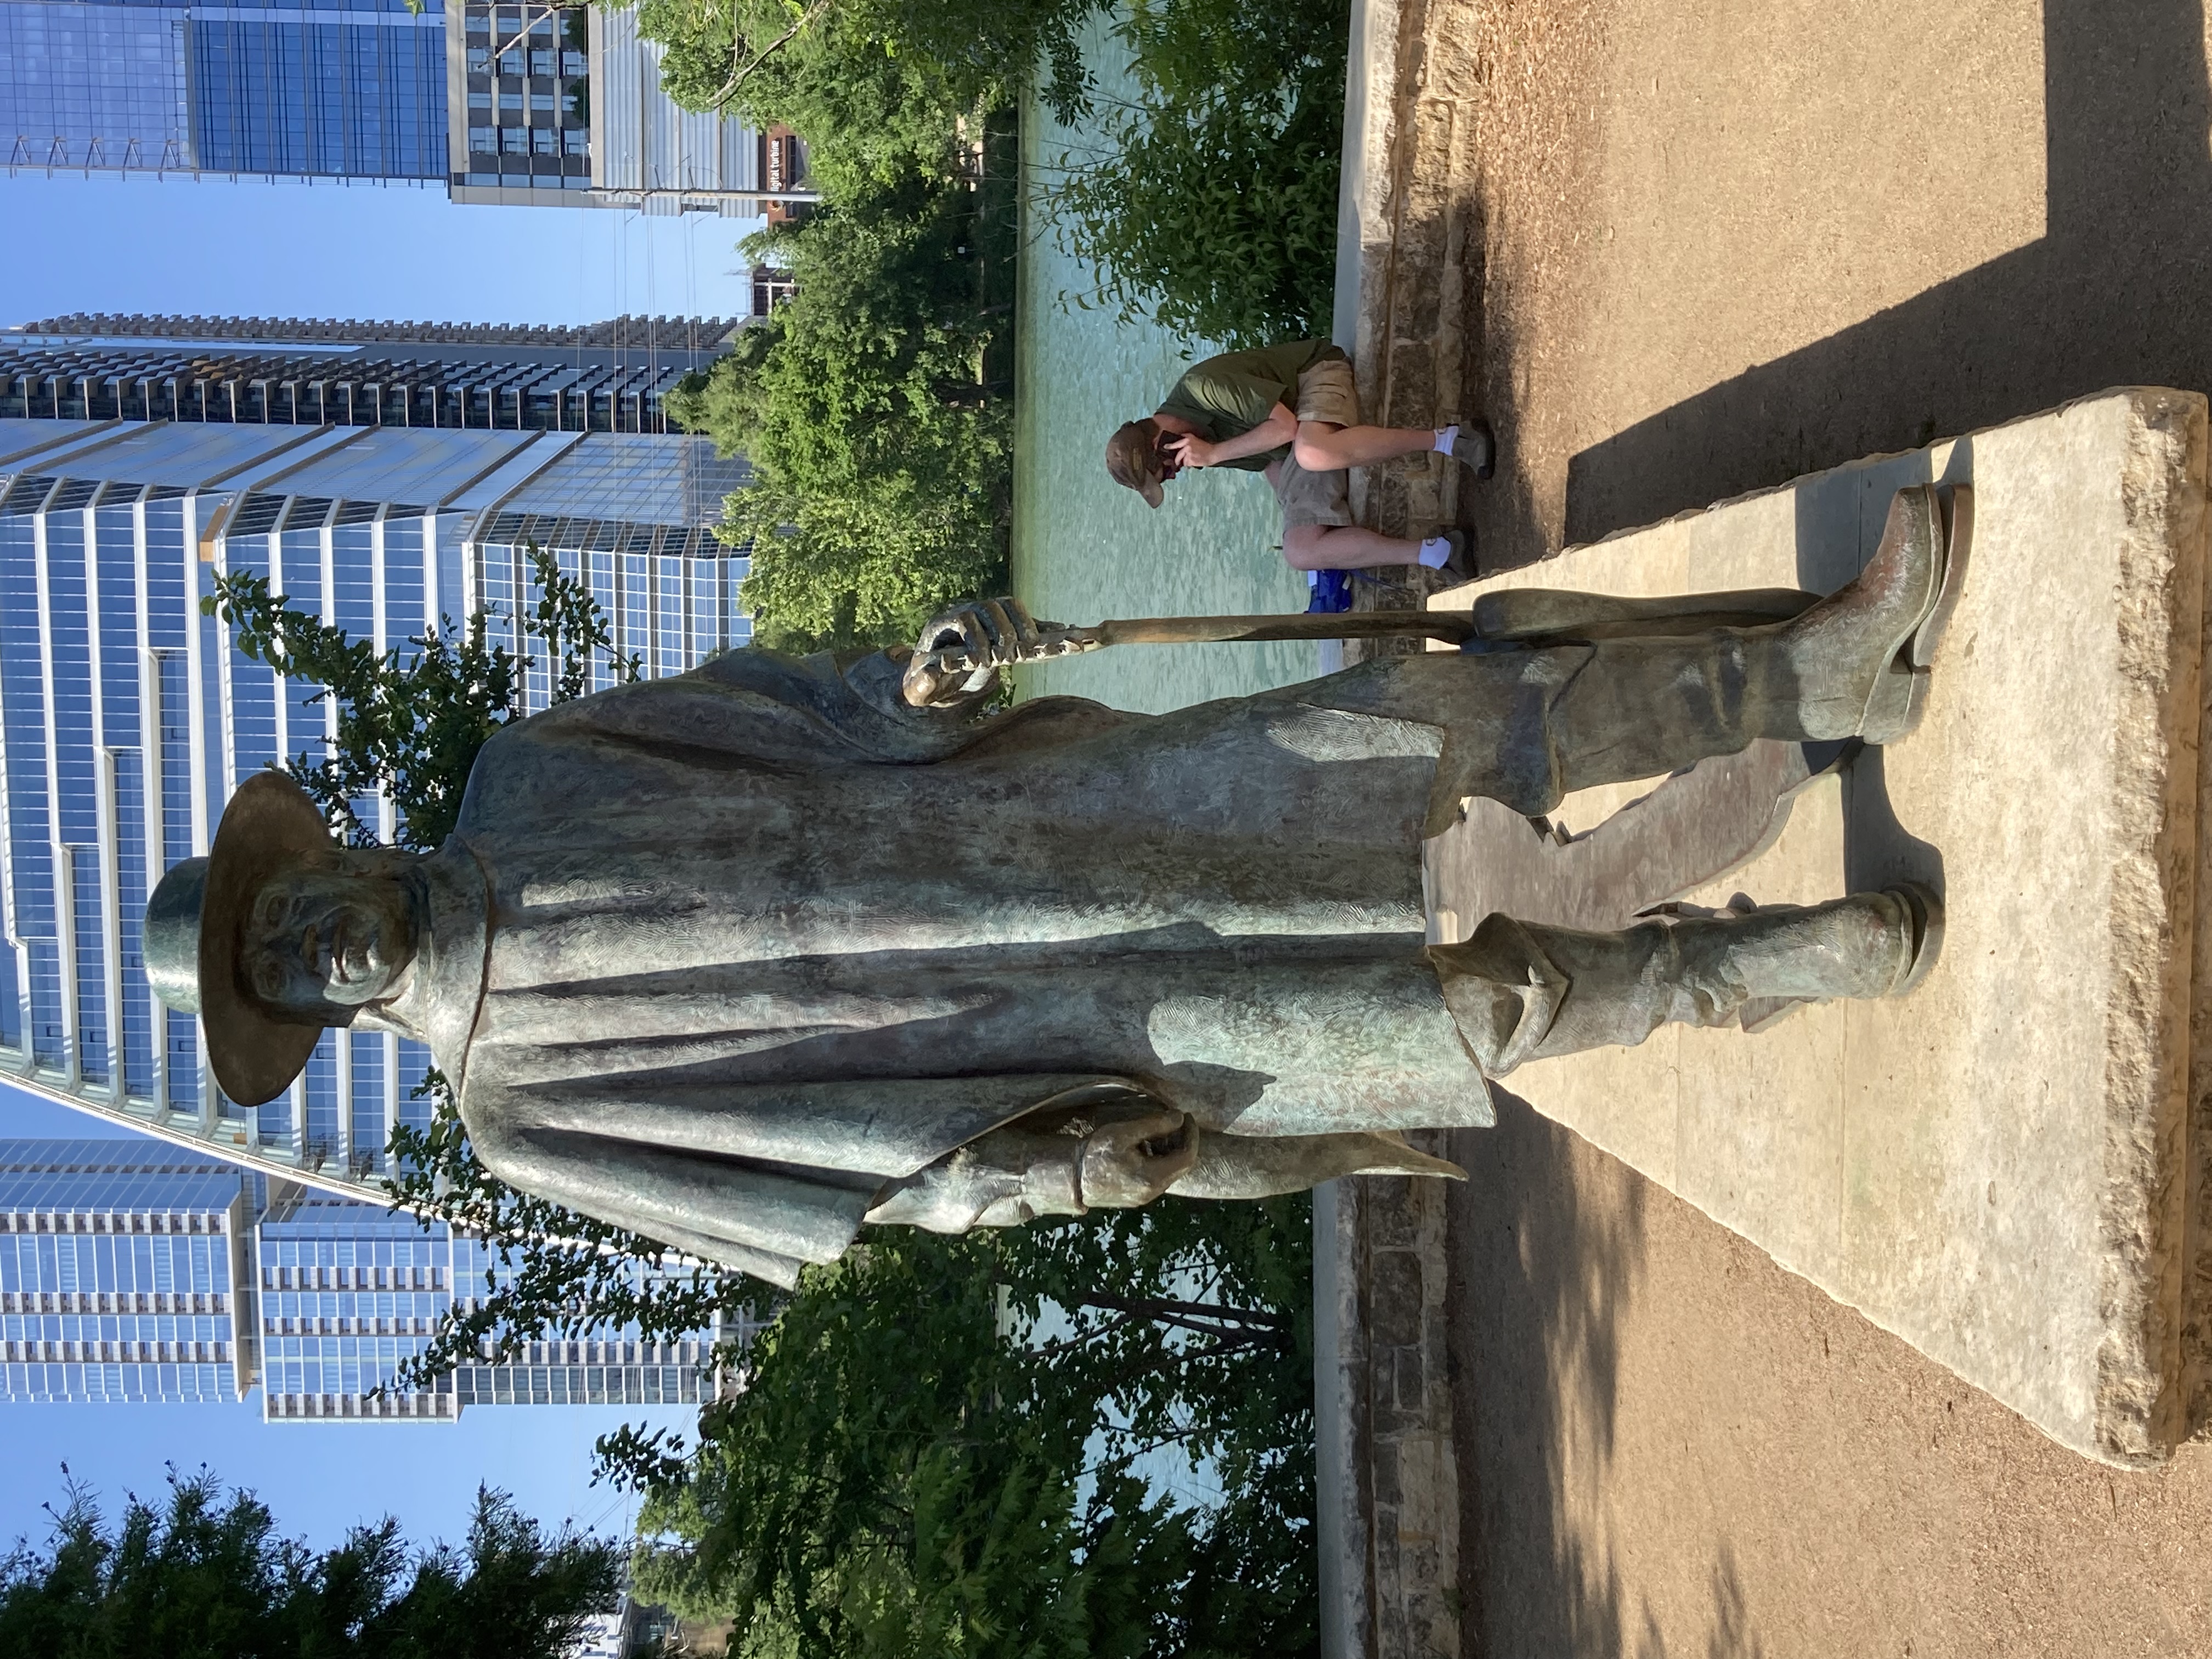 Stevie Ray Vaughn statue